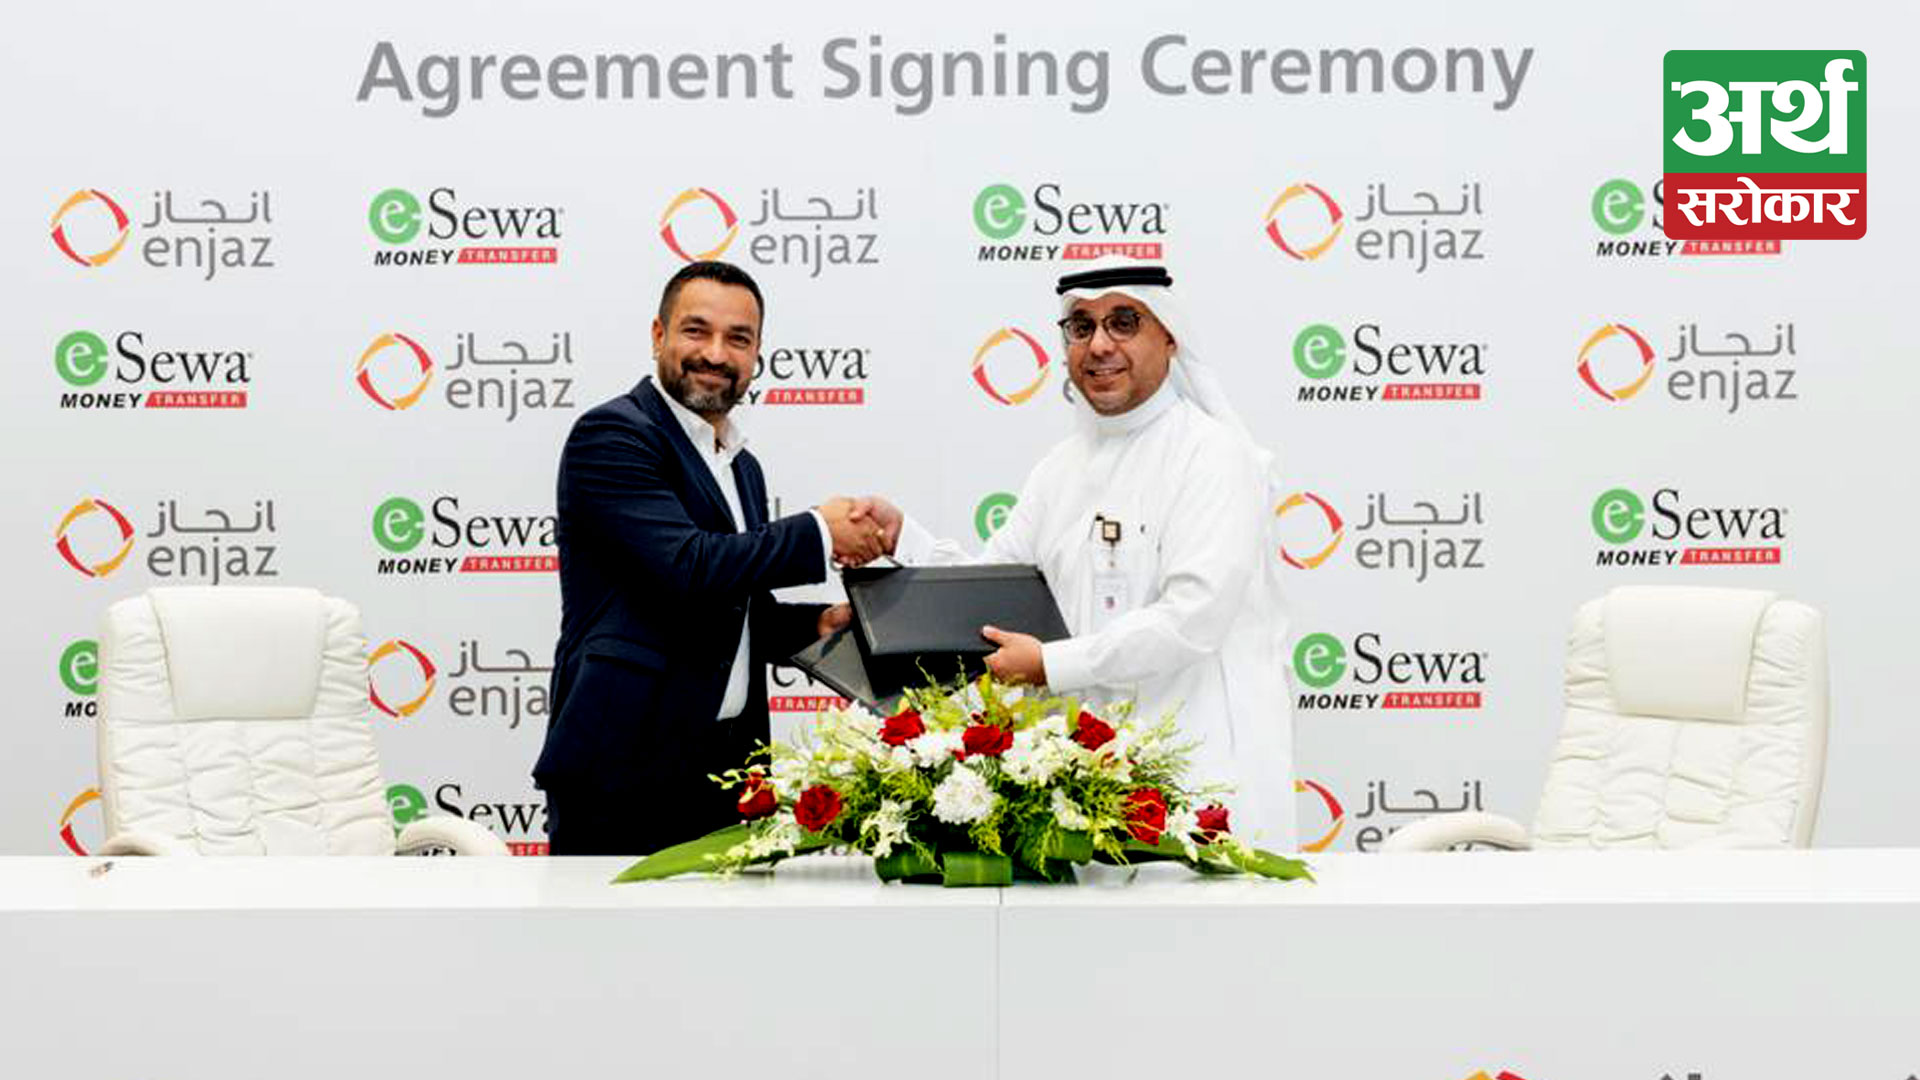 Esewa Money Transfer partners with Saudi Arabia-based Enjaz Payment Services